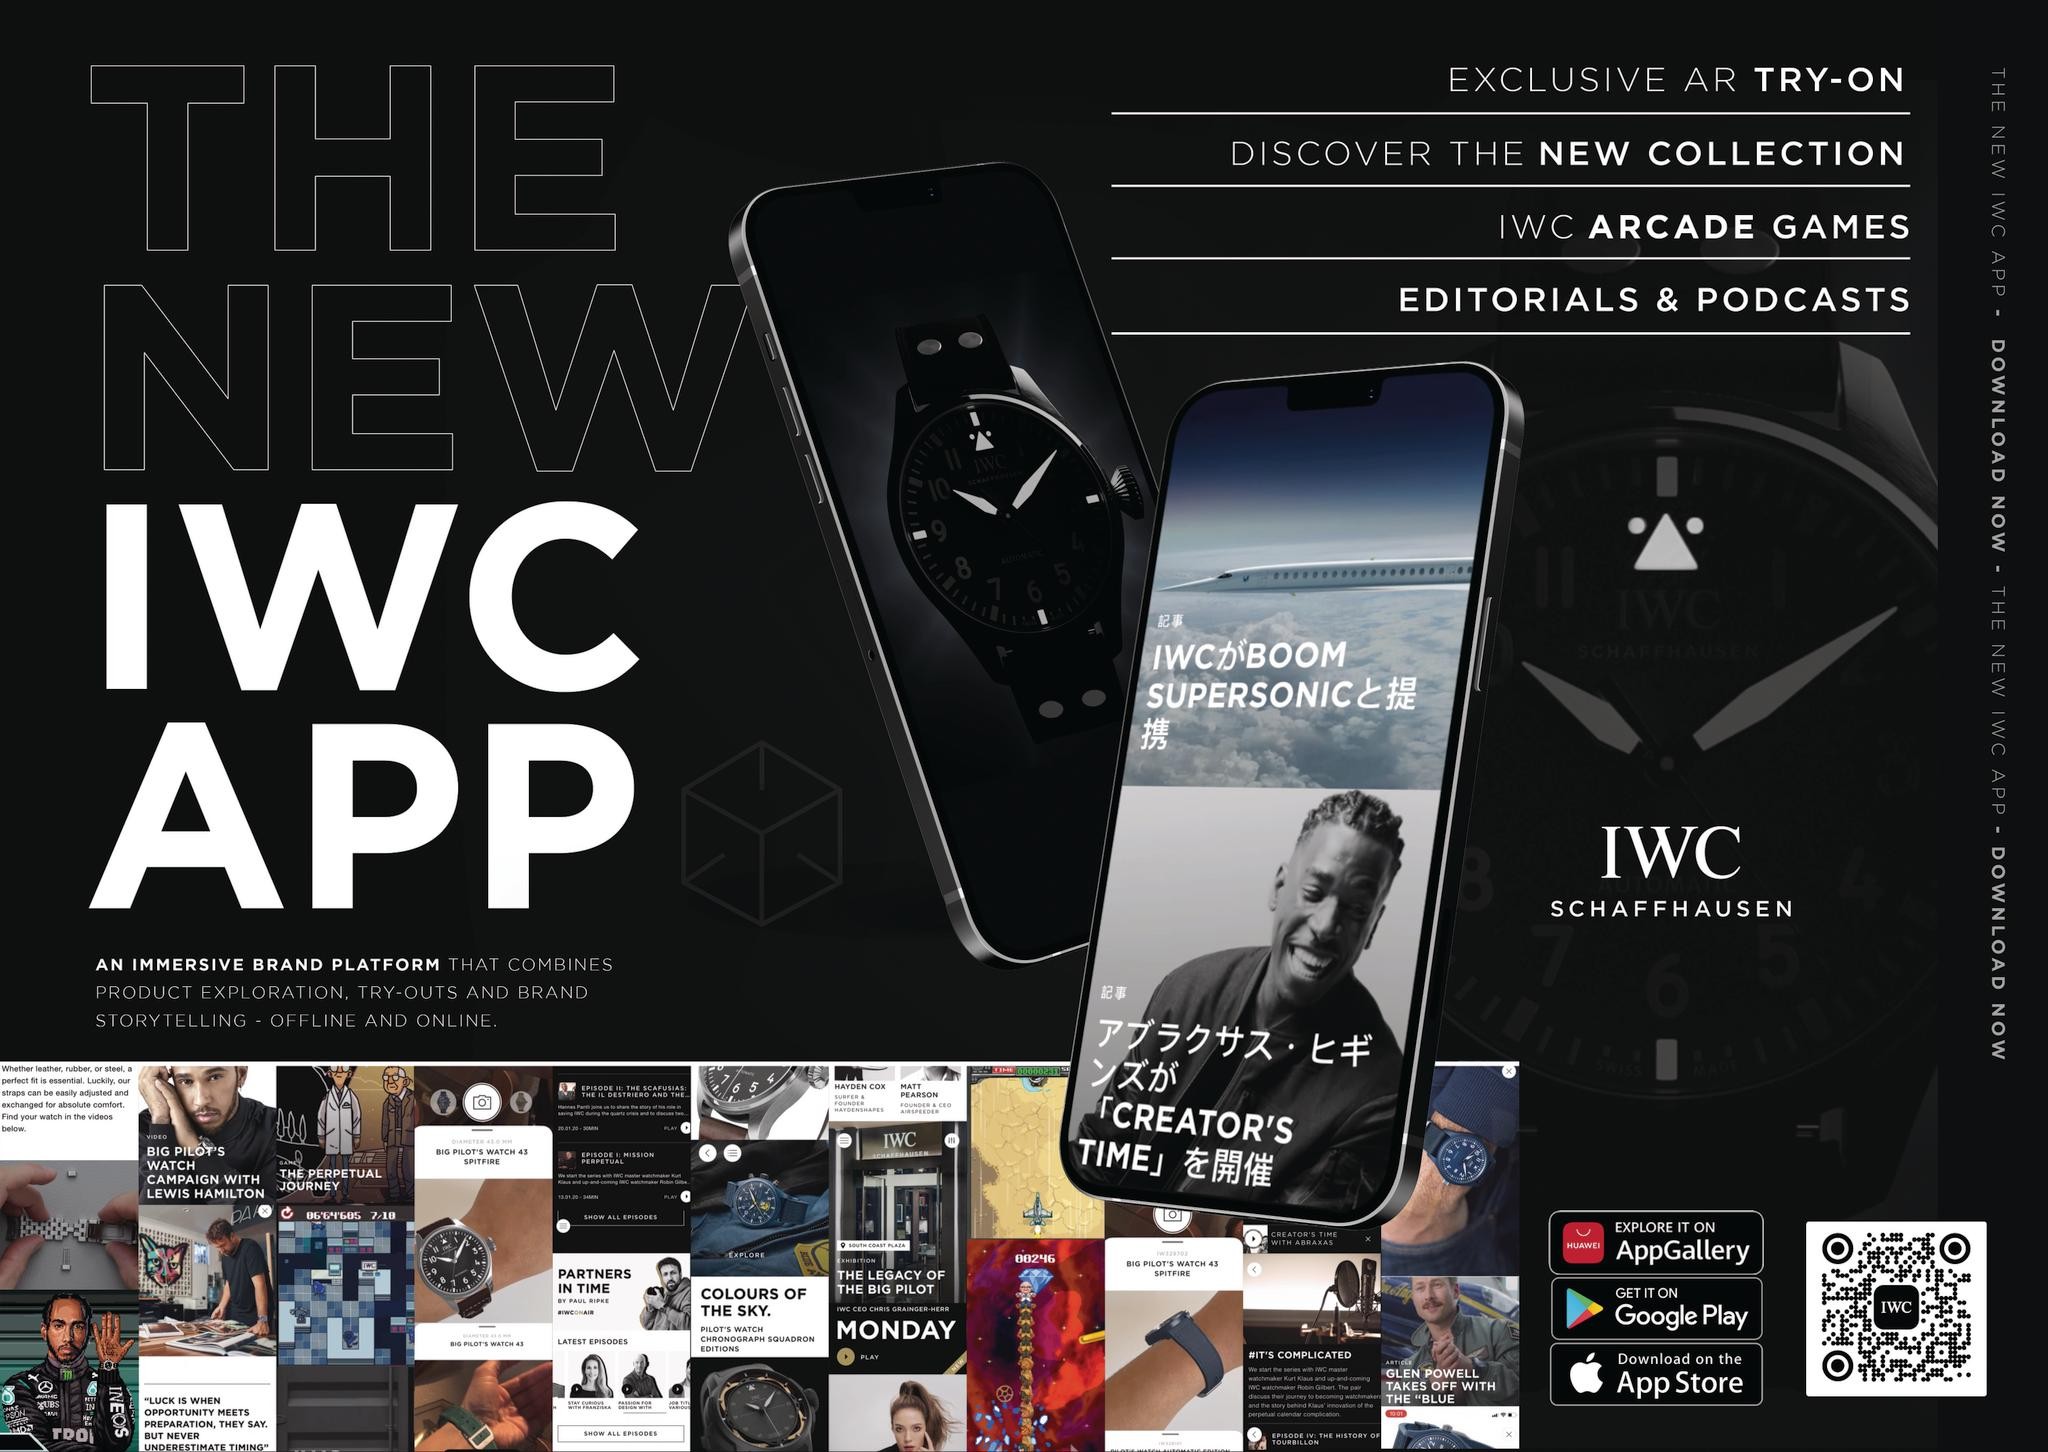 IWC App